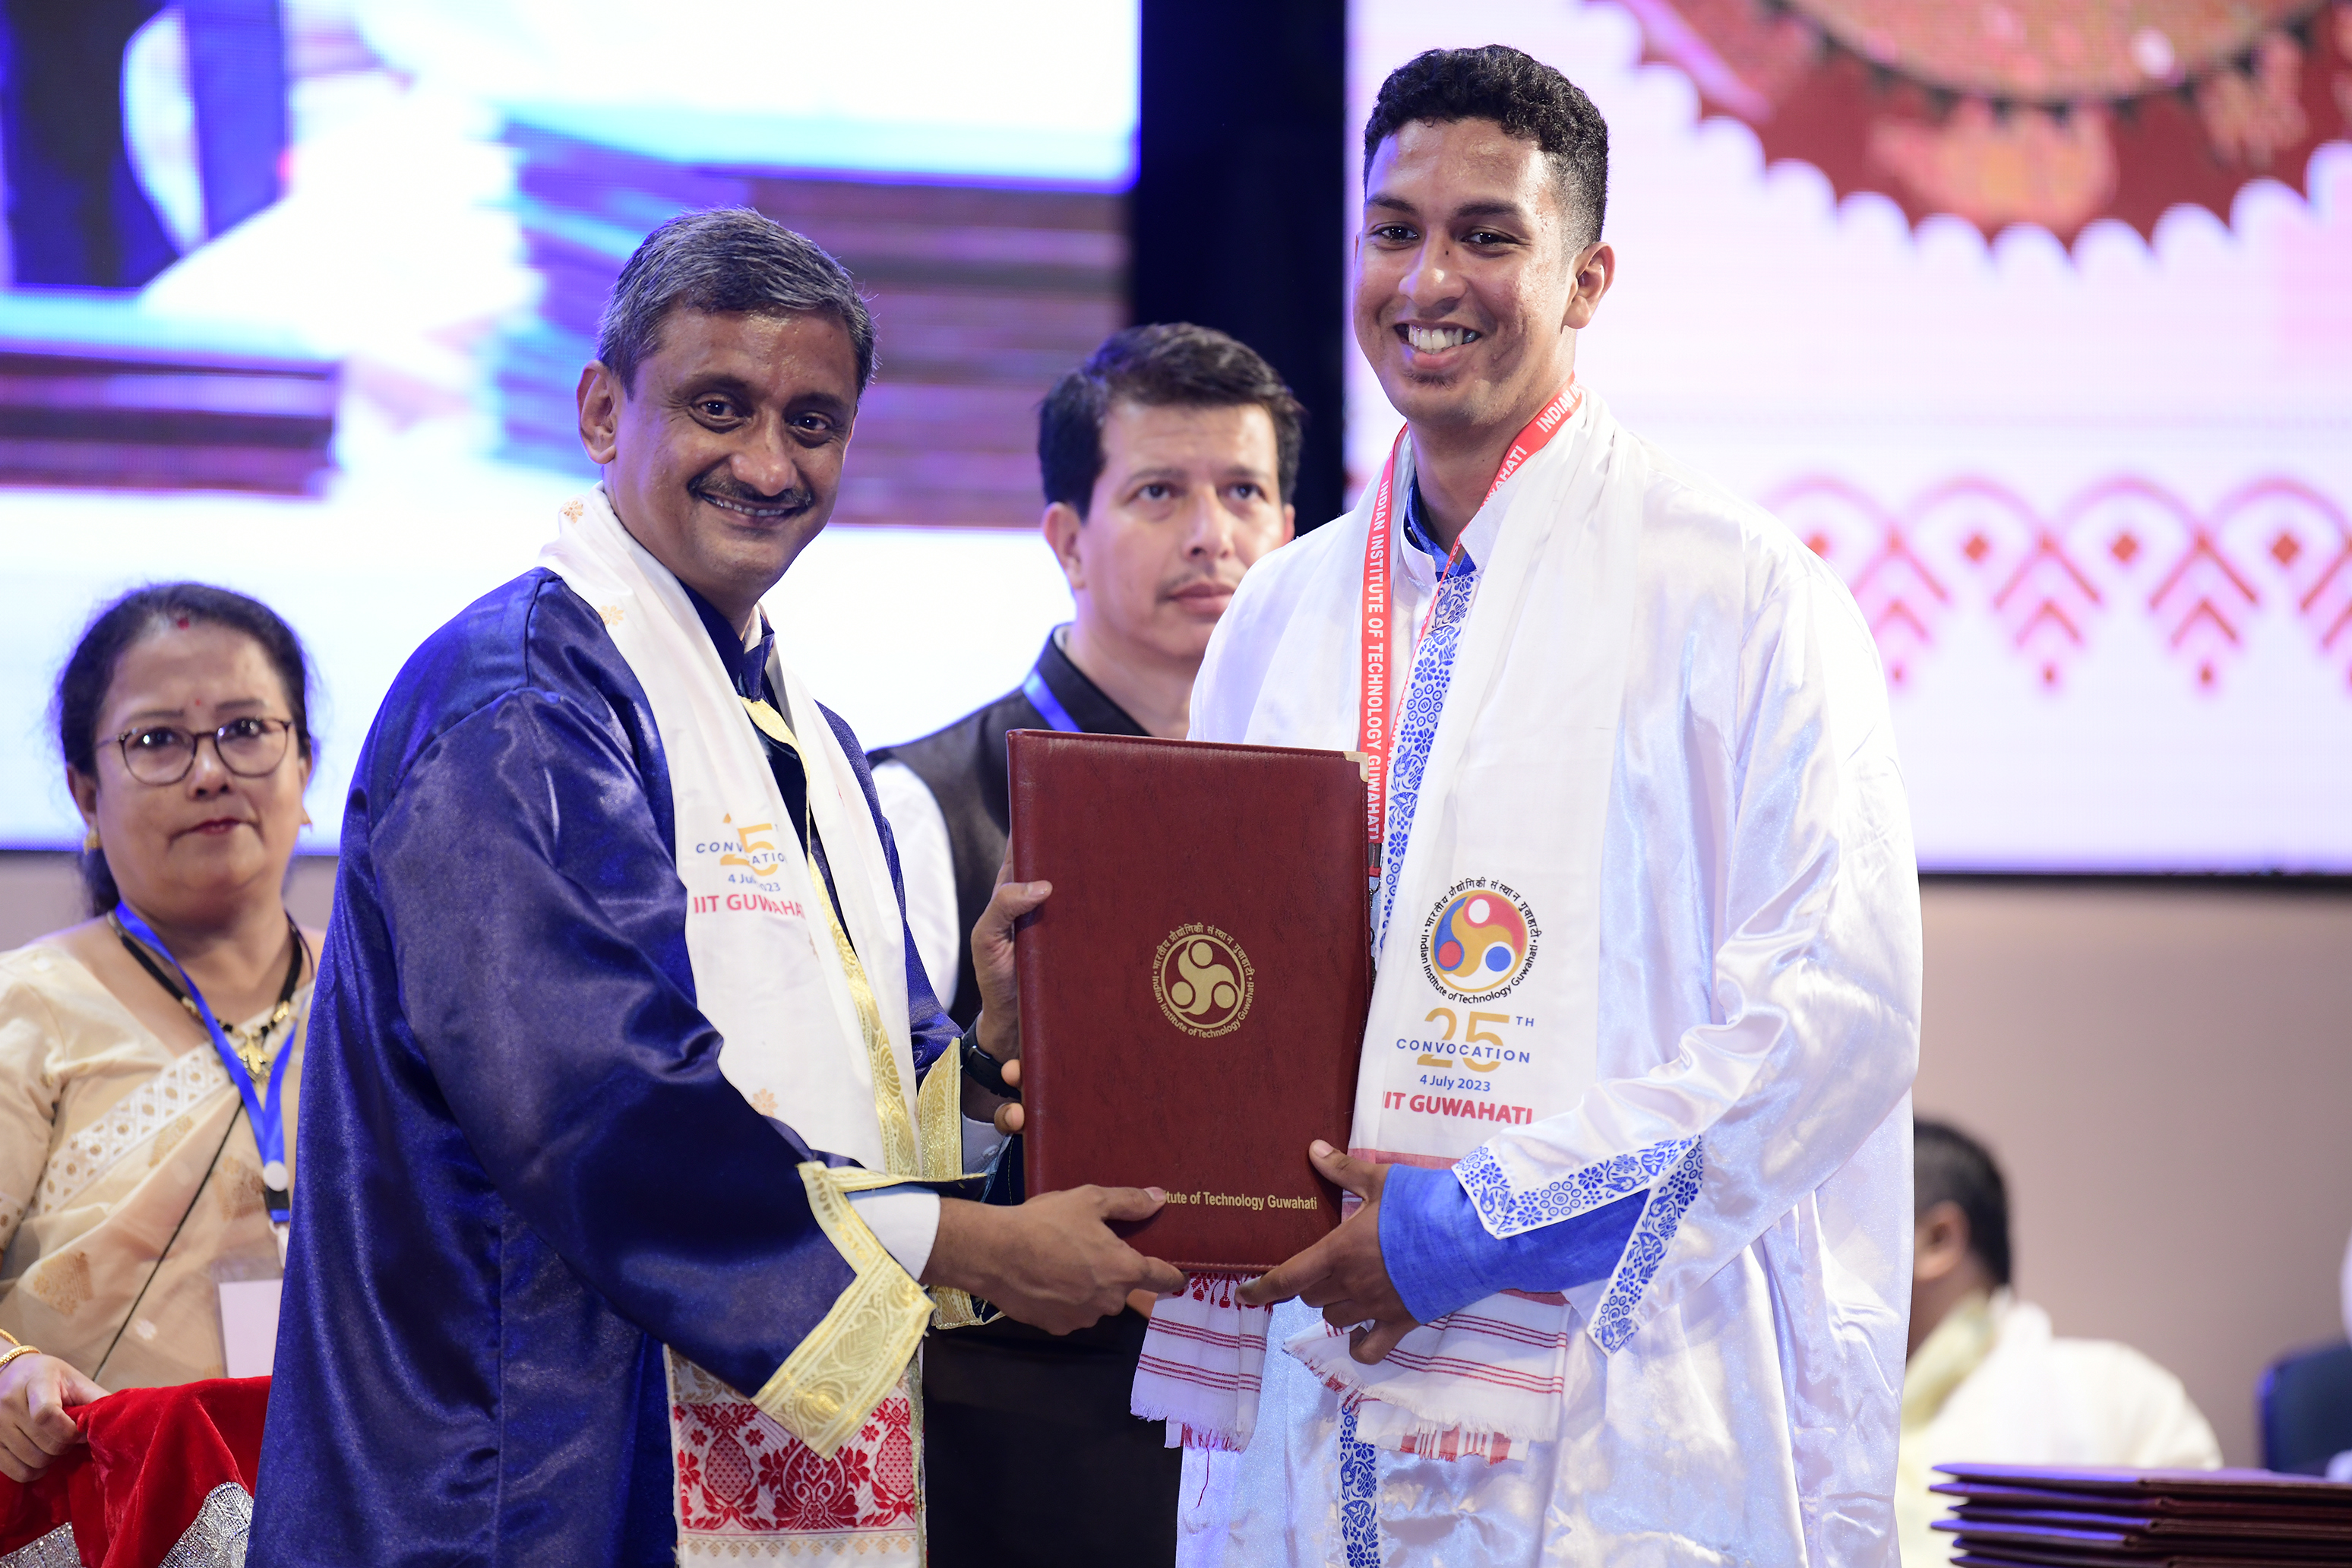 IIT Gandhinagar awards 456 degrees, 58 medals at 12th convocation